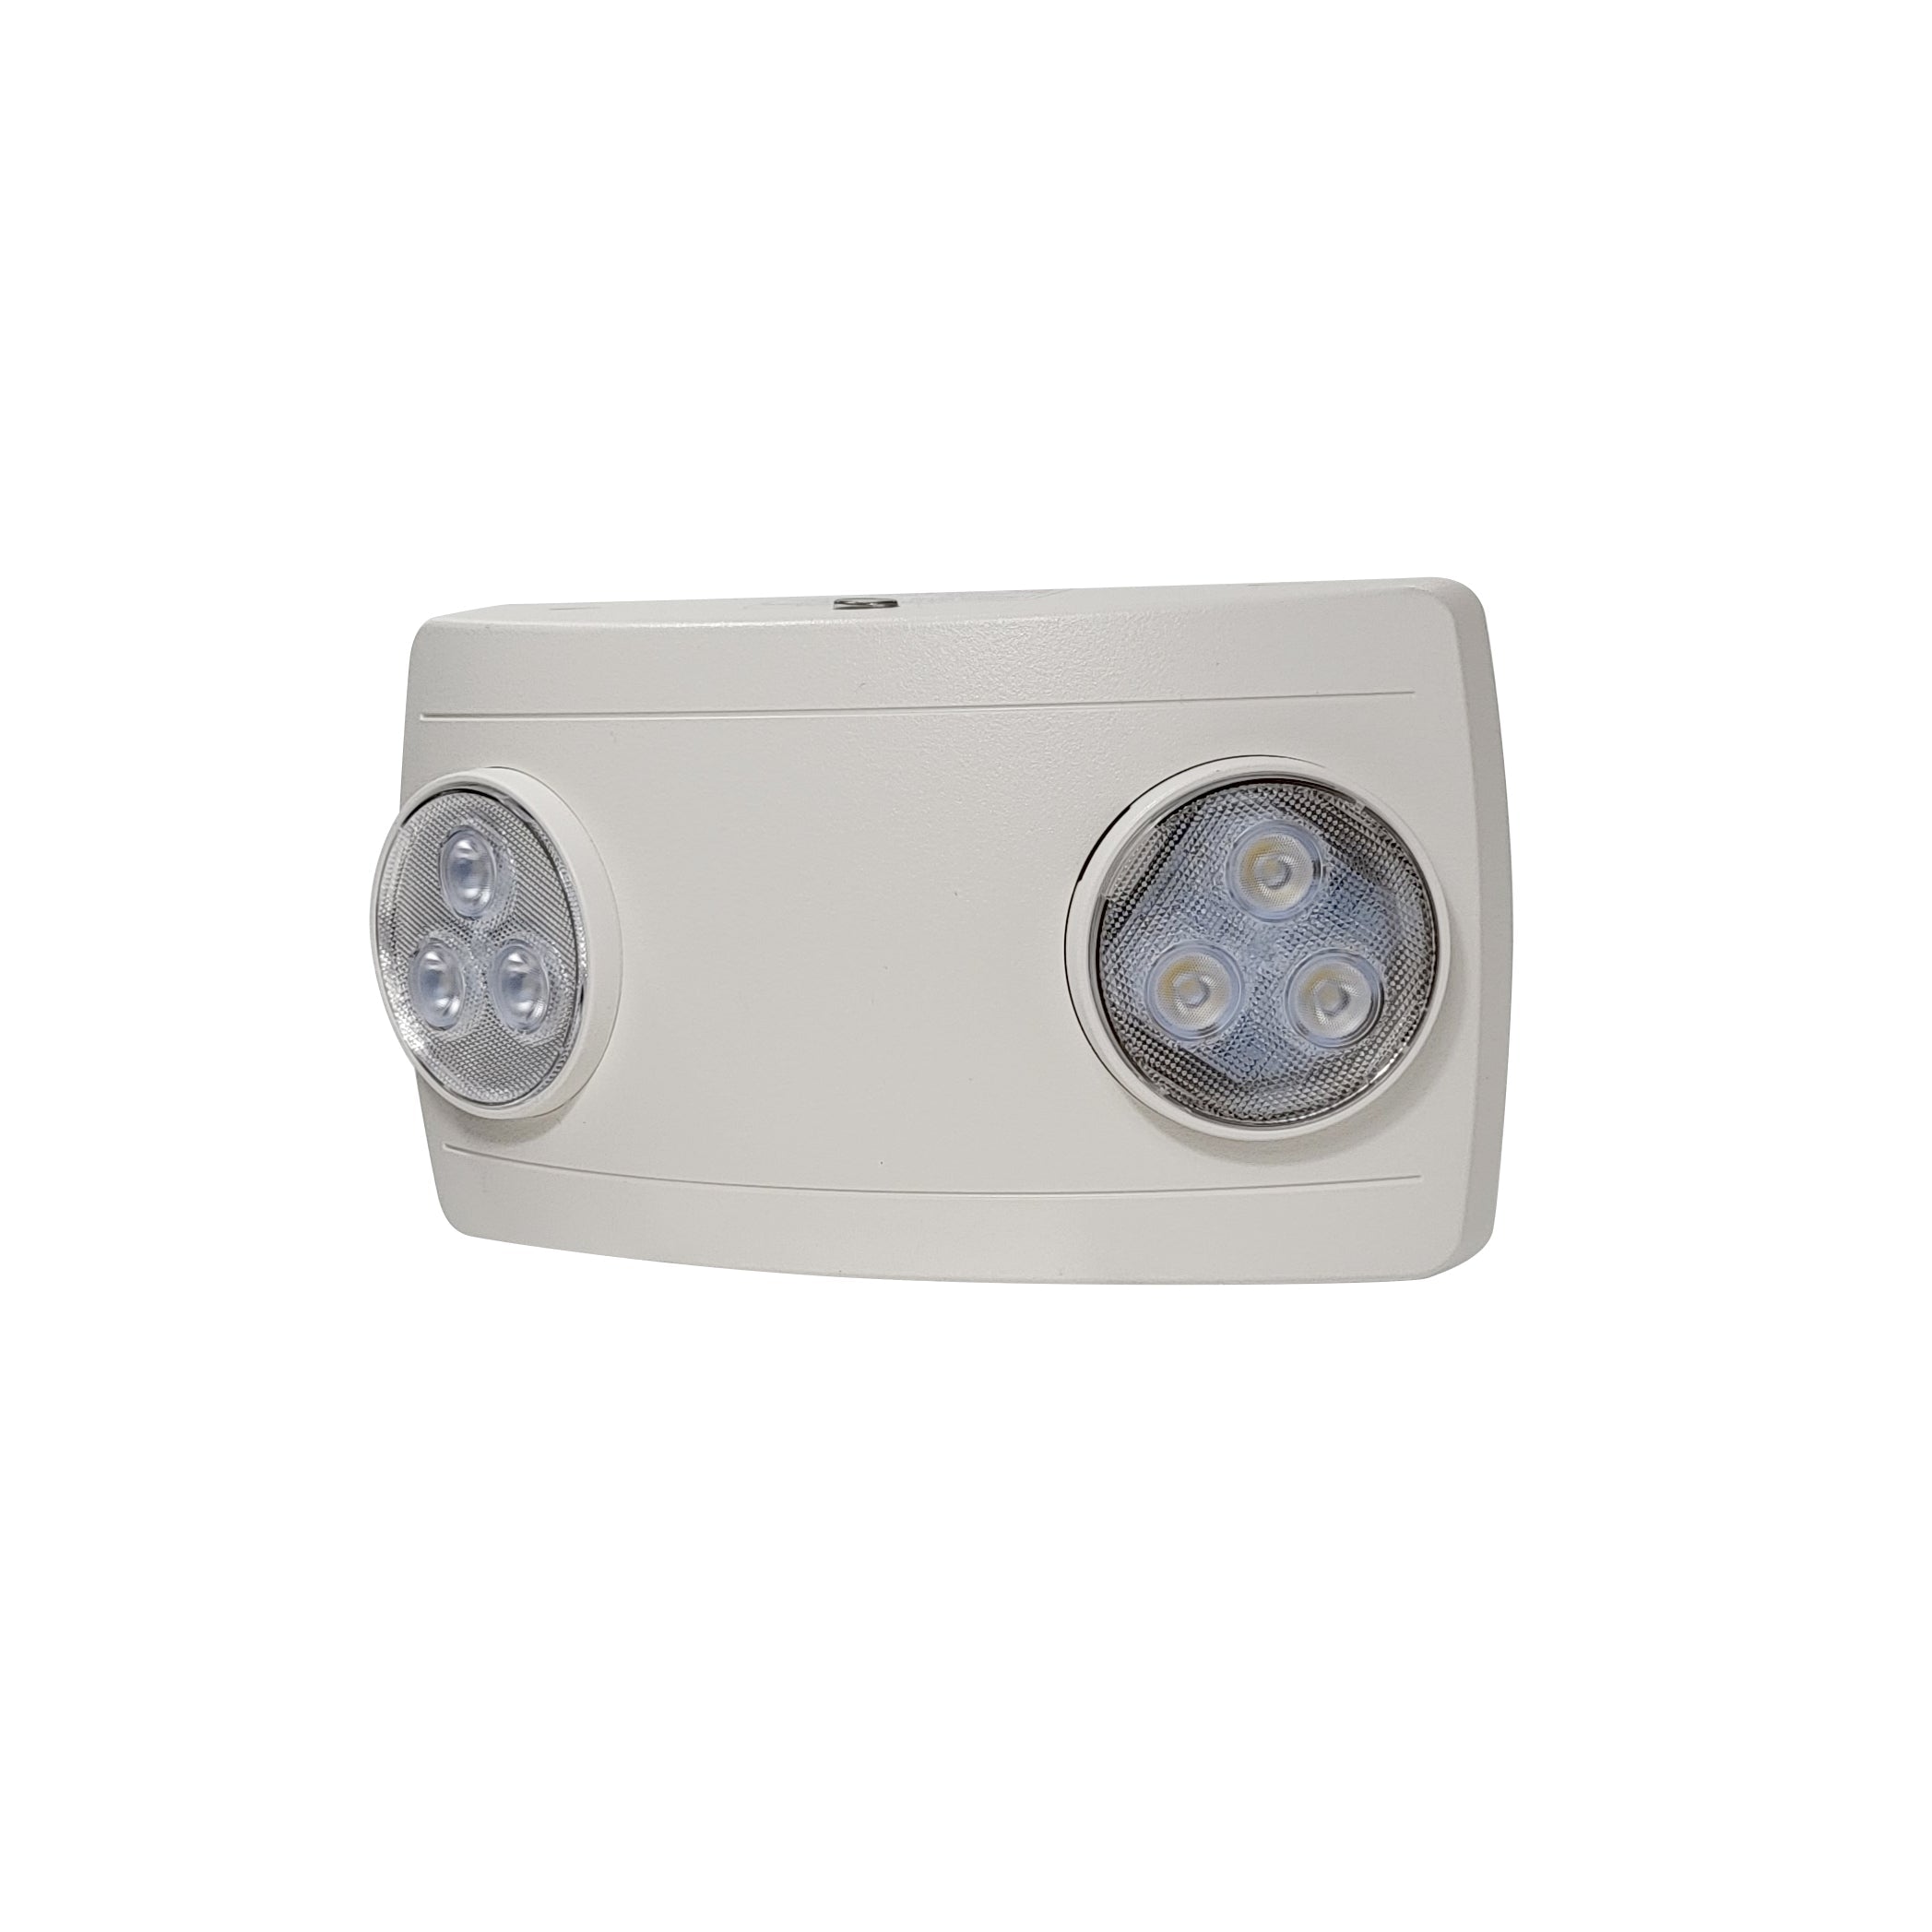 Nora Lighting NE-612LEDHORCW - Exit / Emergency - Compact Dual Head LED Emergency Light with 2W Remote Capability, Manual Test, 120/277V, White